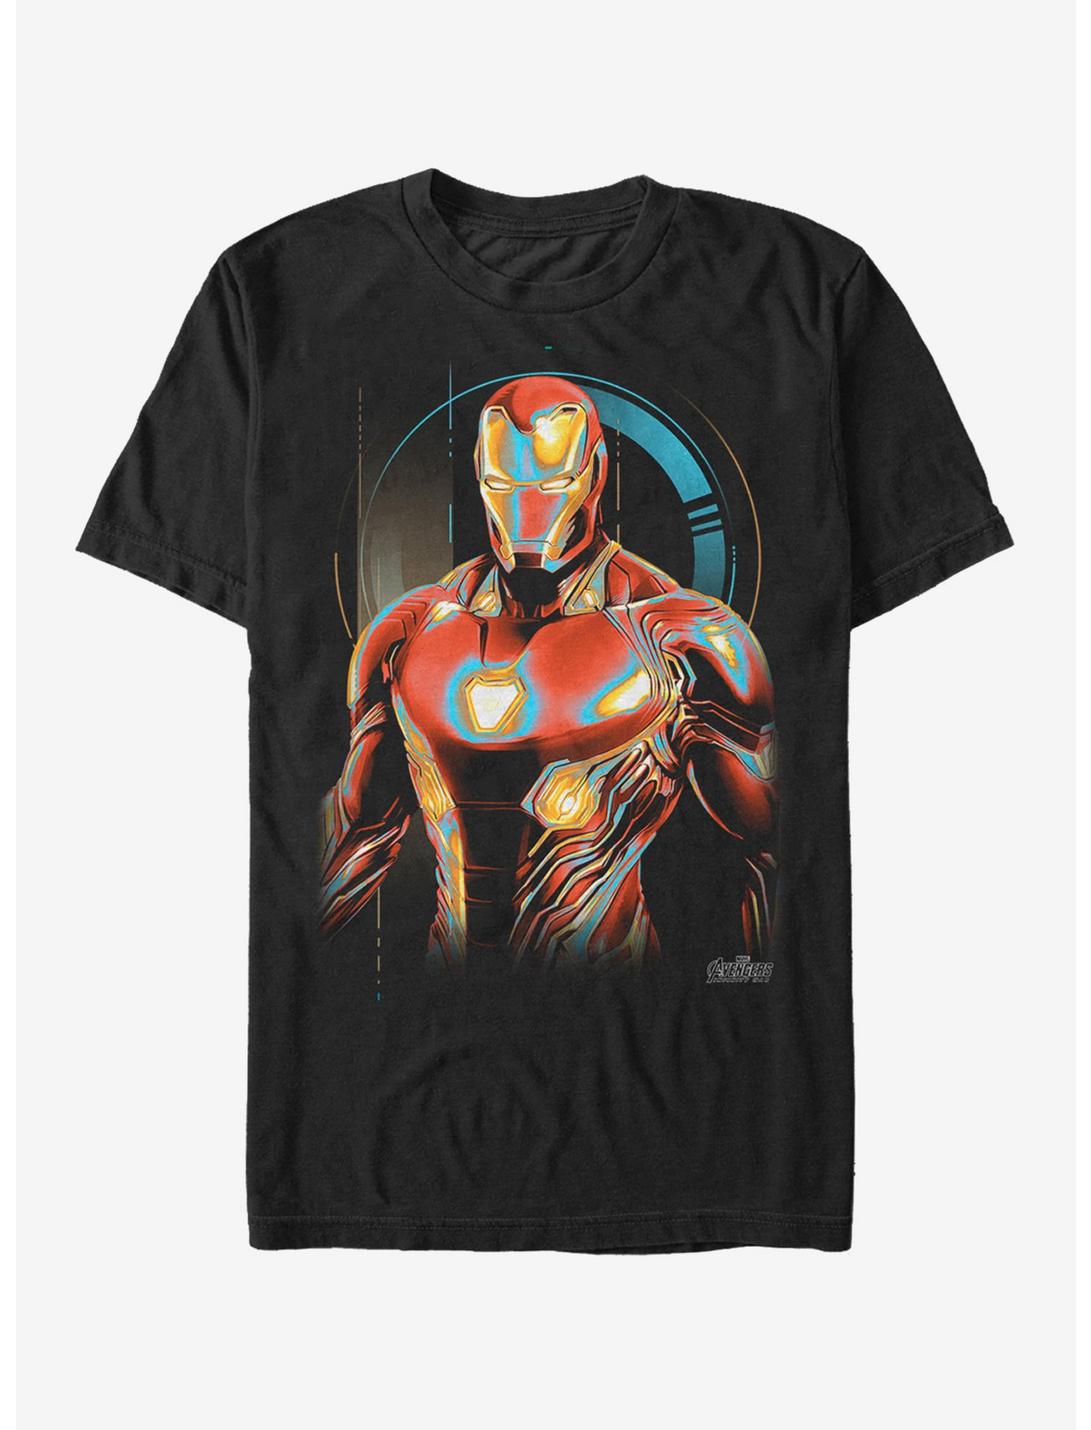 Avengers Infinity War Superhero Inspired Mens Button Down Short Sleeve Shirt 